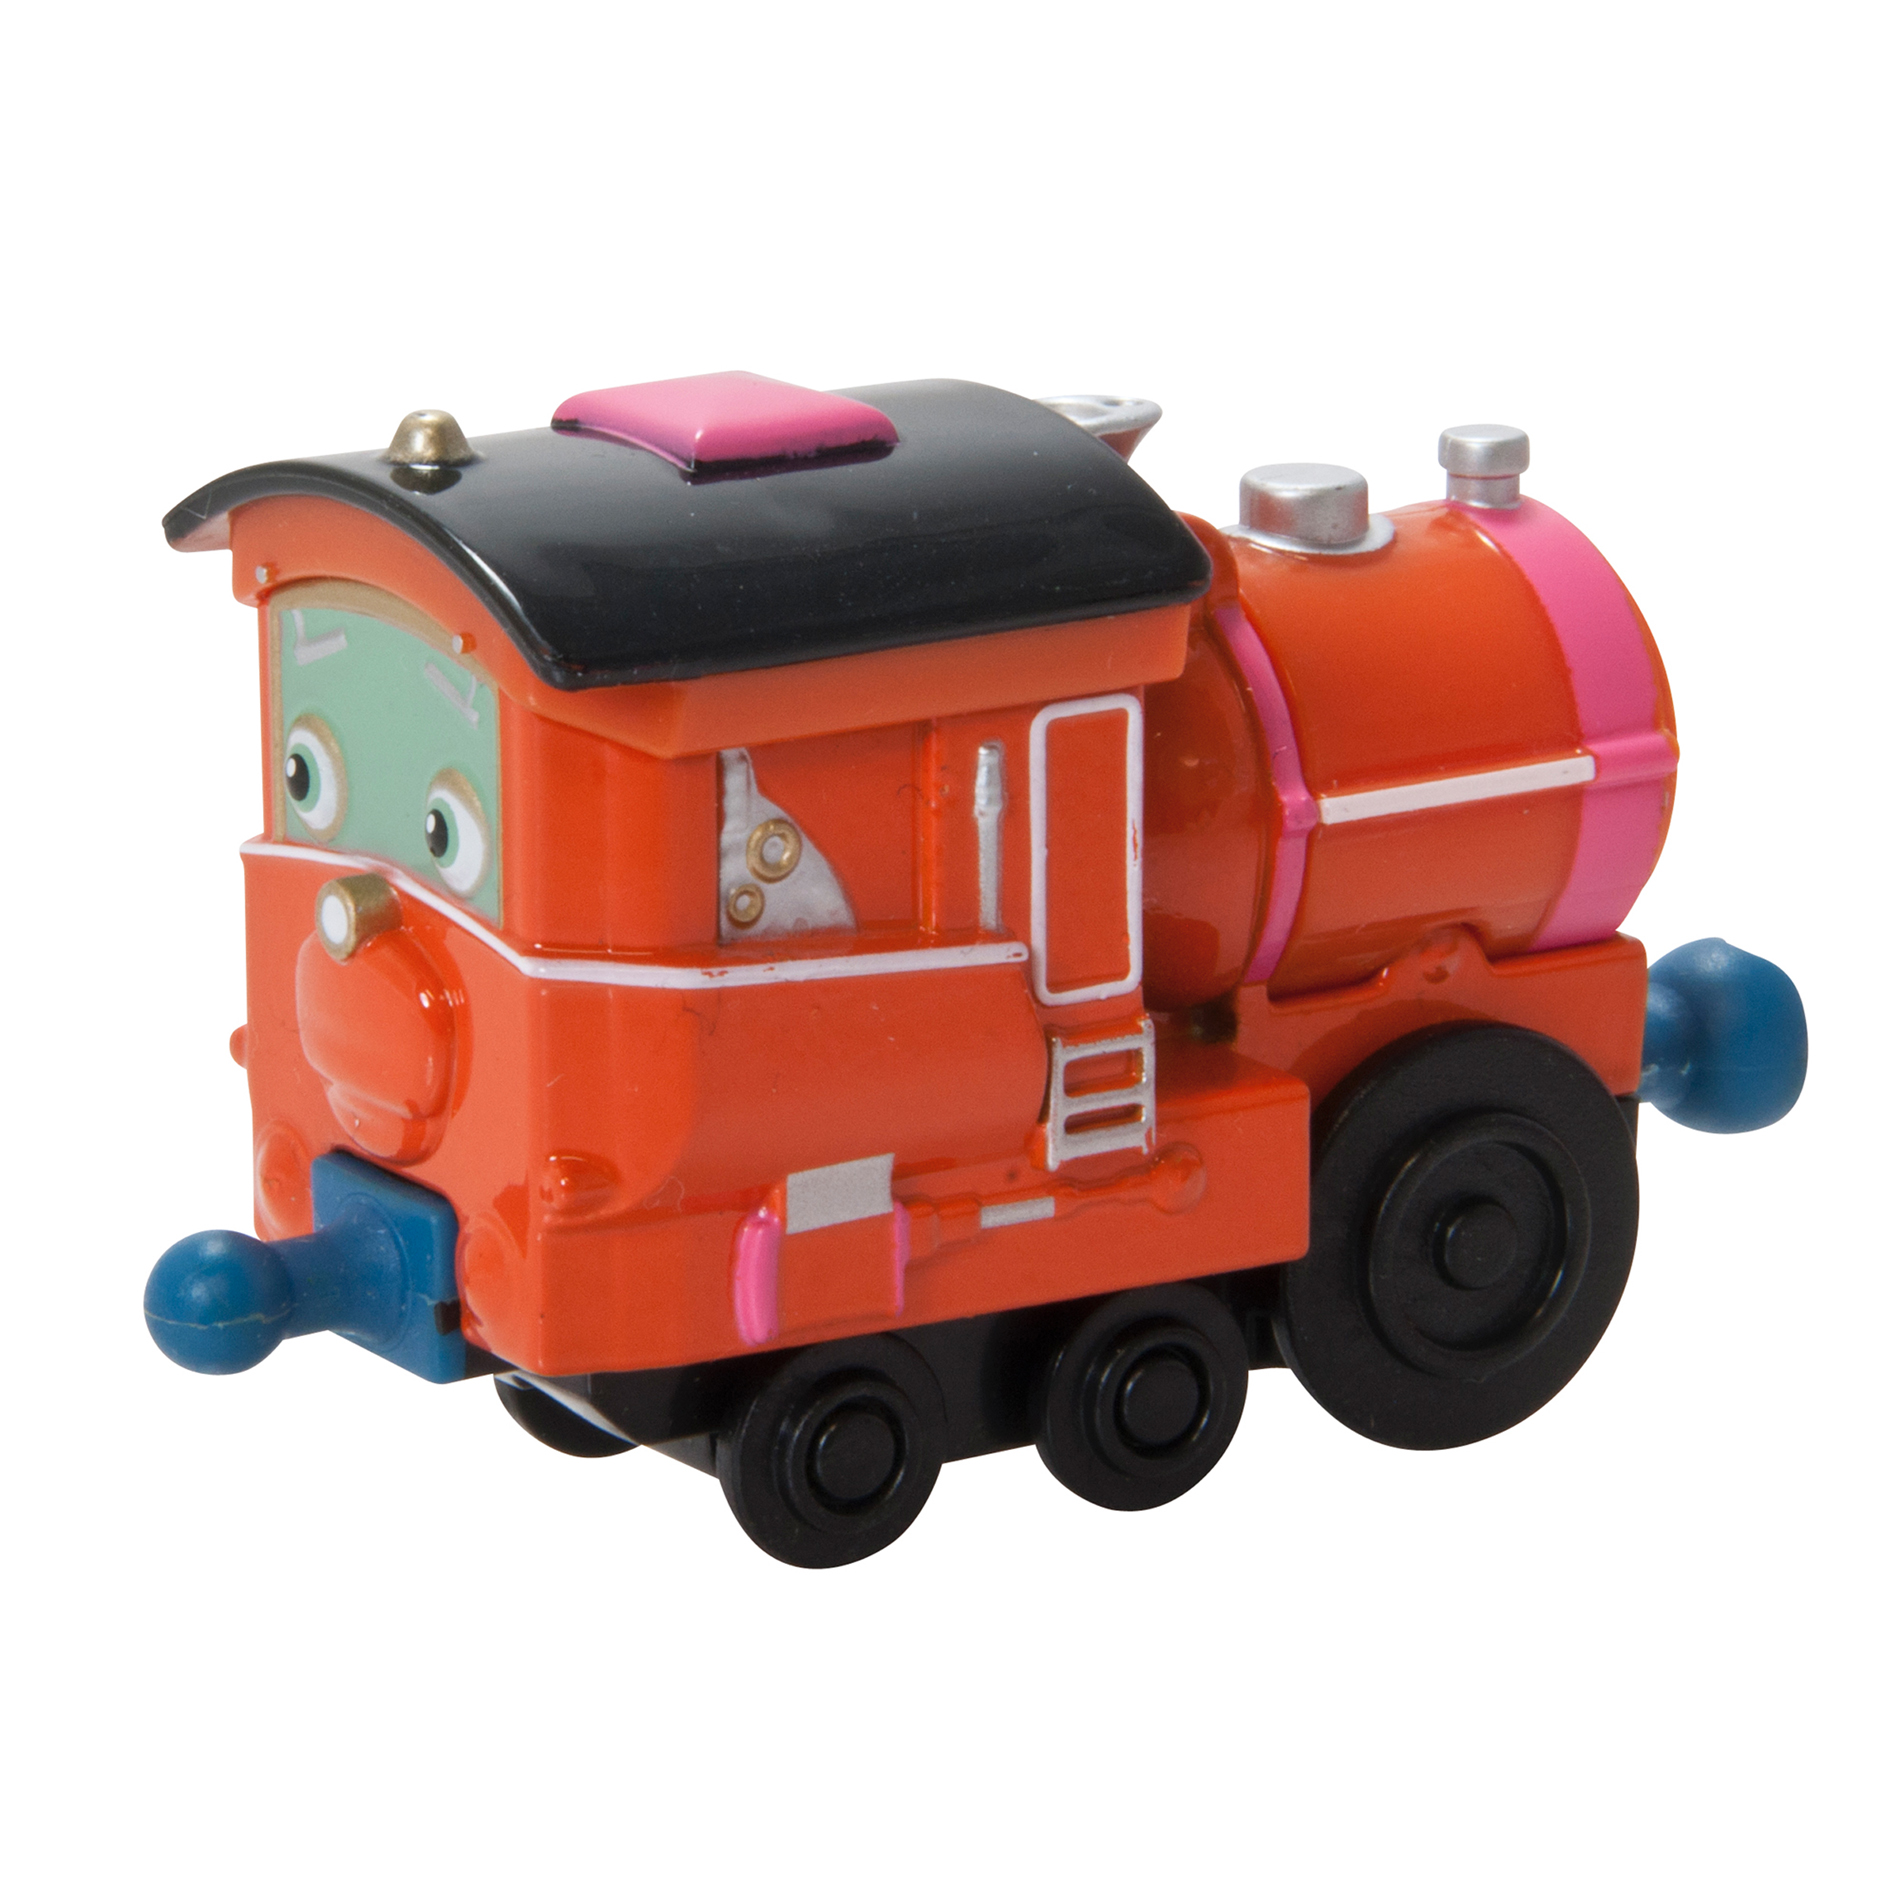 Tomy Chugginton Die Cast Piper Toy Train Car   Toys & Games   Trains